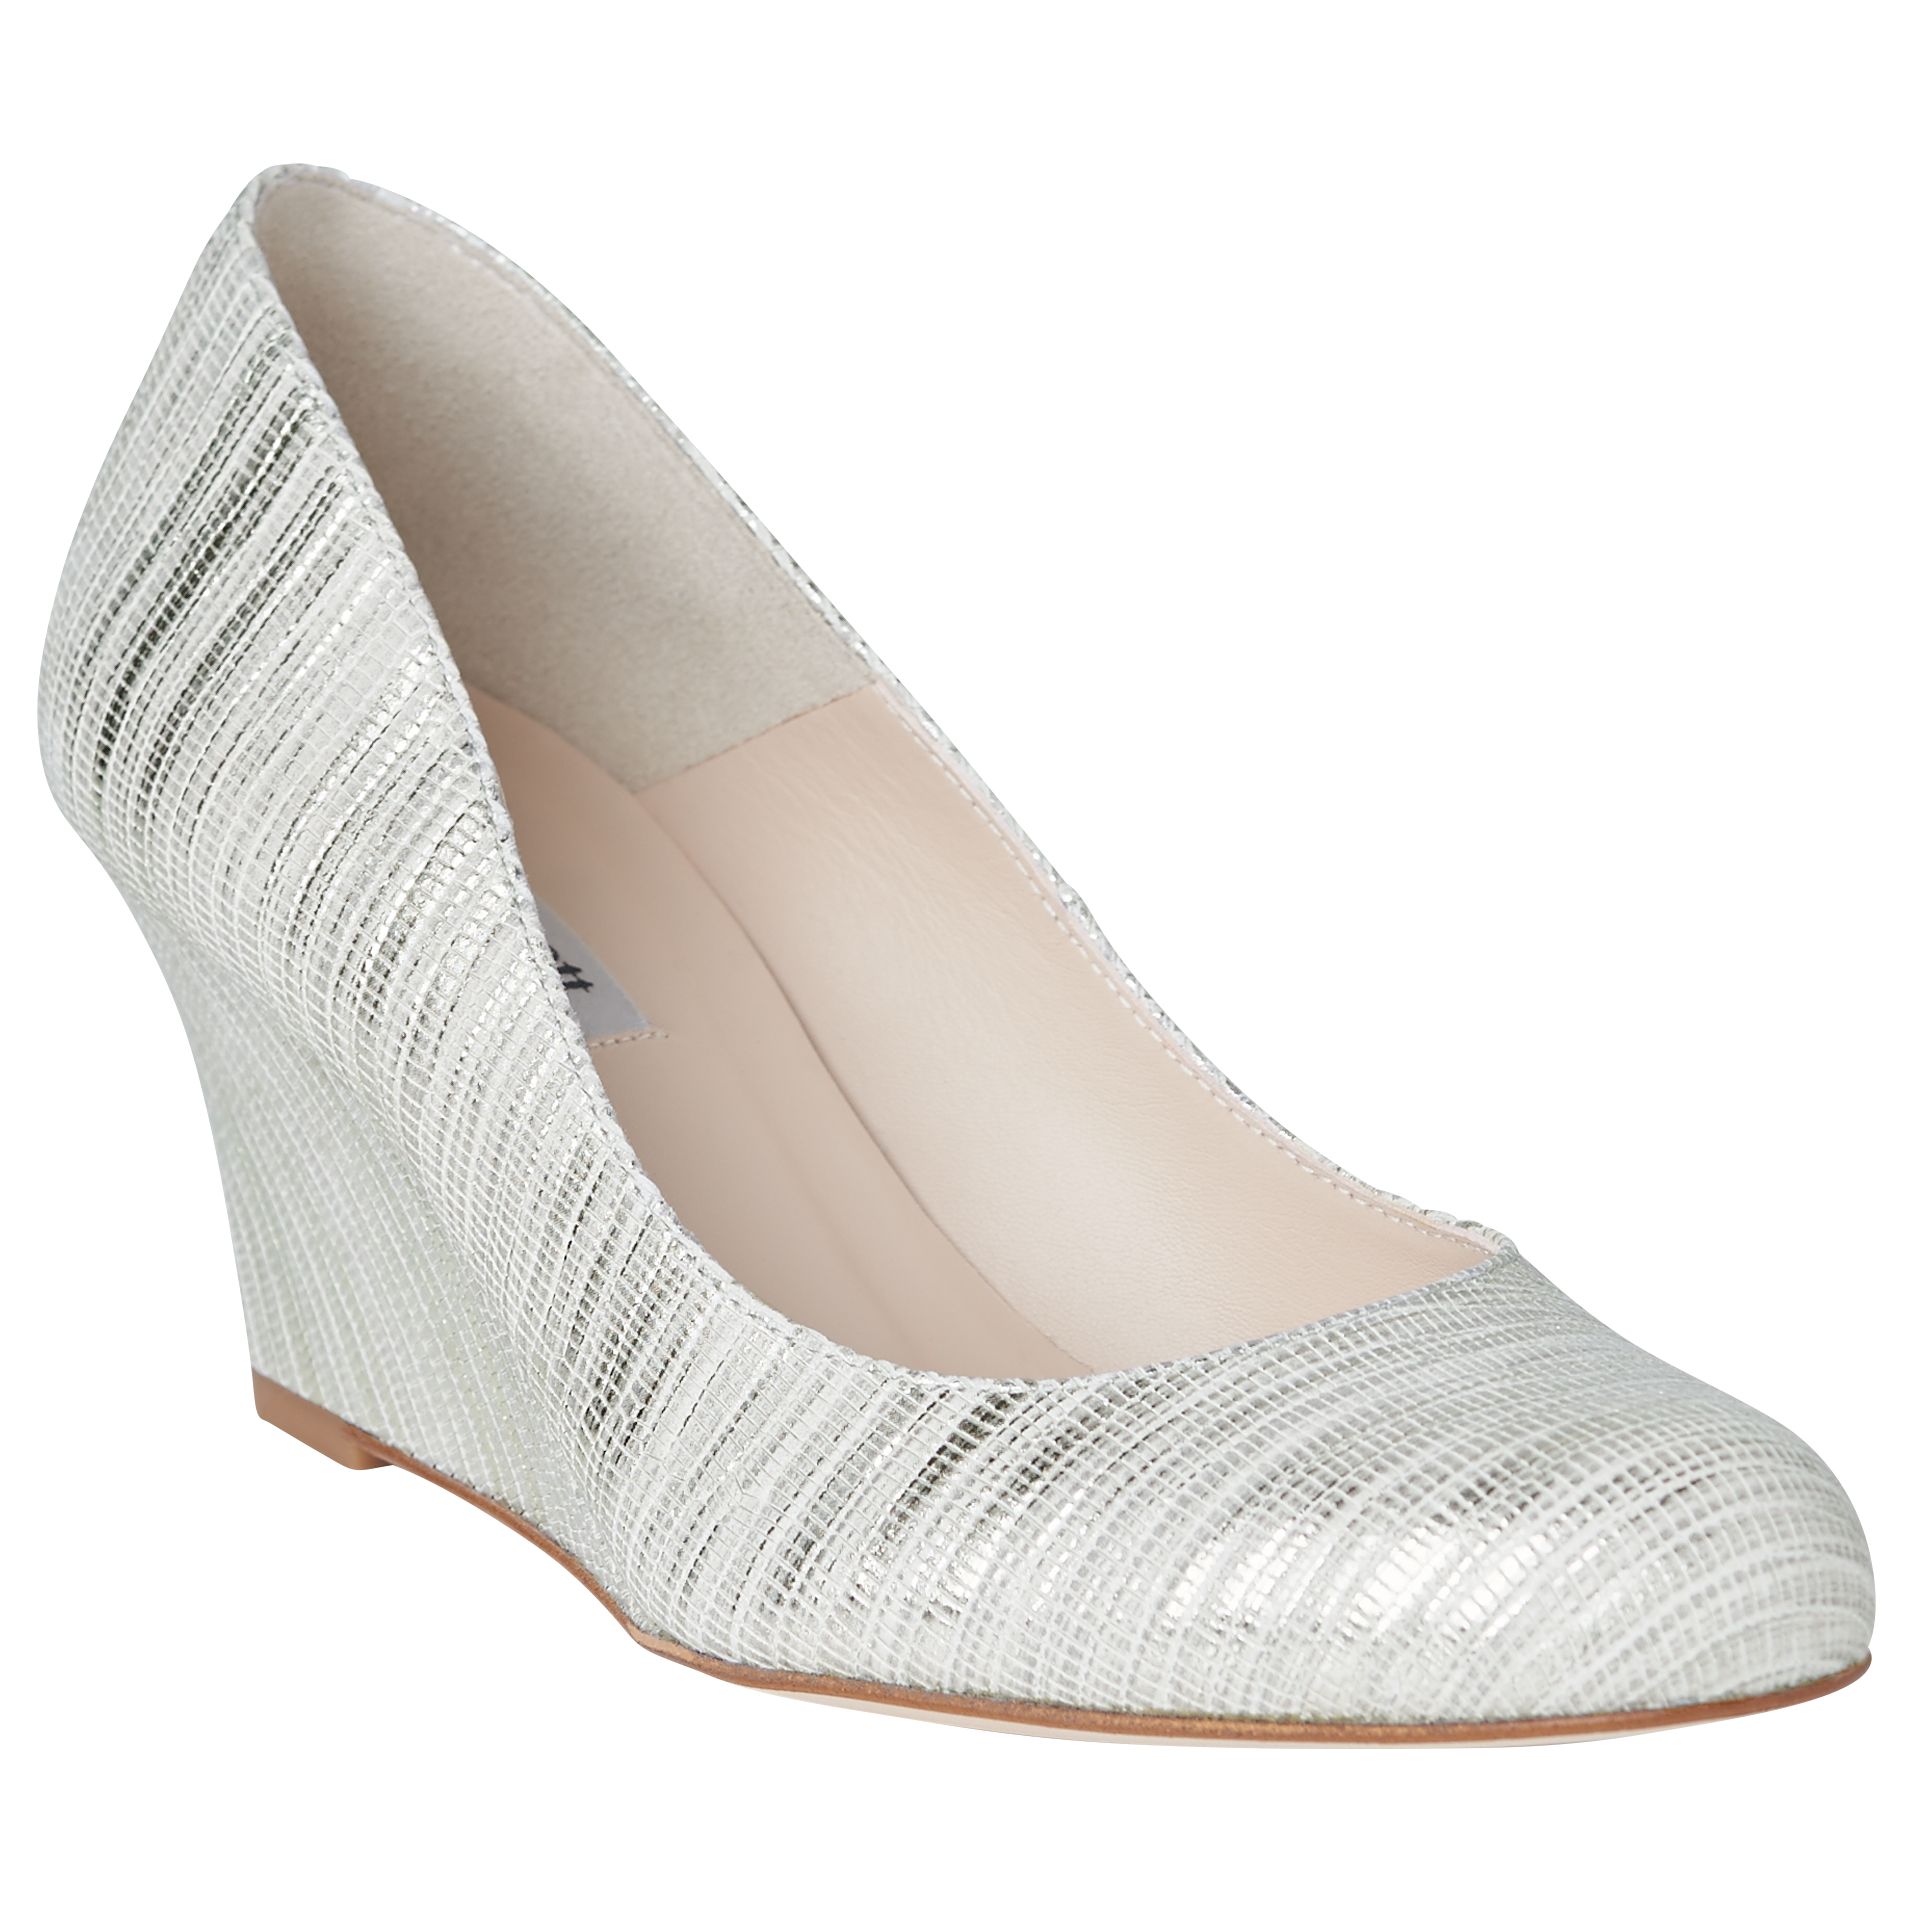 L.K. Bennett Zahara Wedge Heeled Court Shoes, Metallic Cream, 5.5